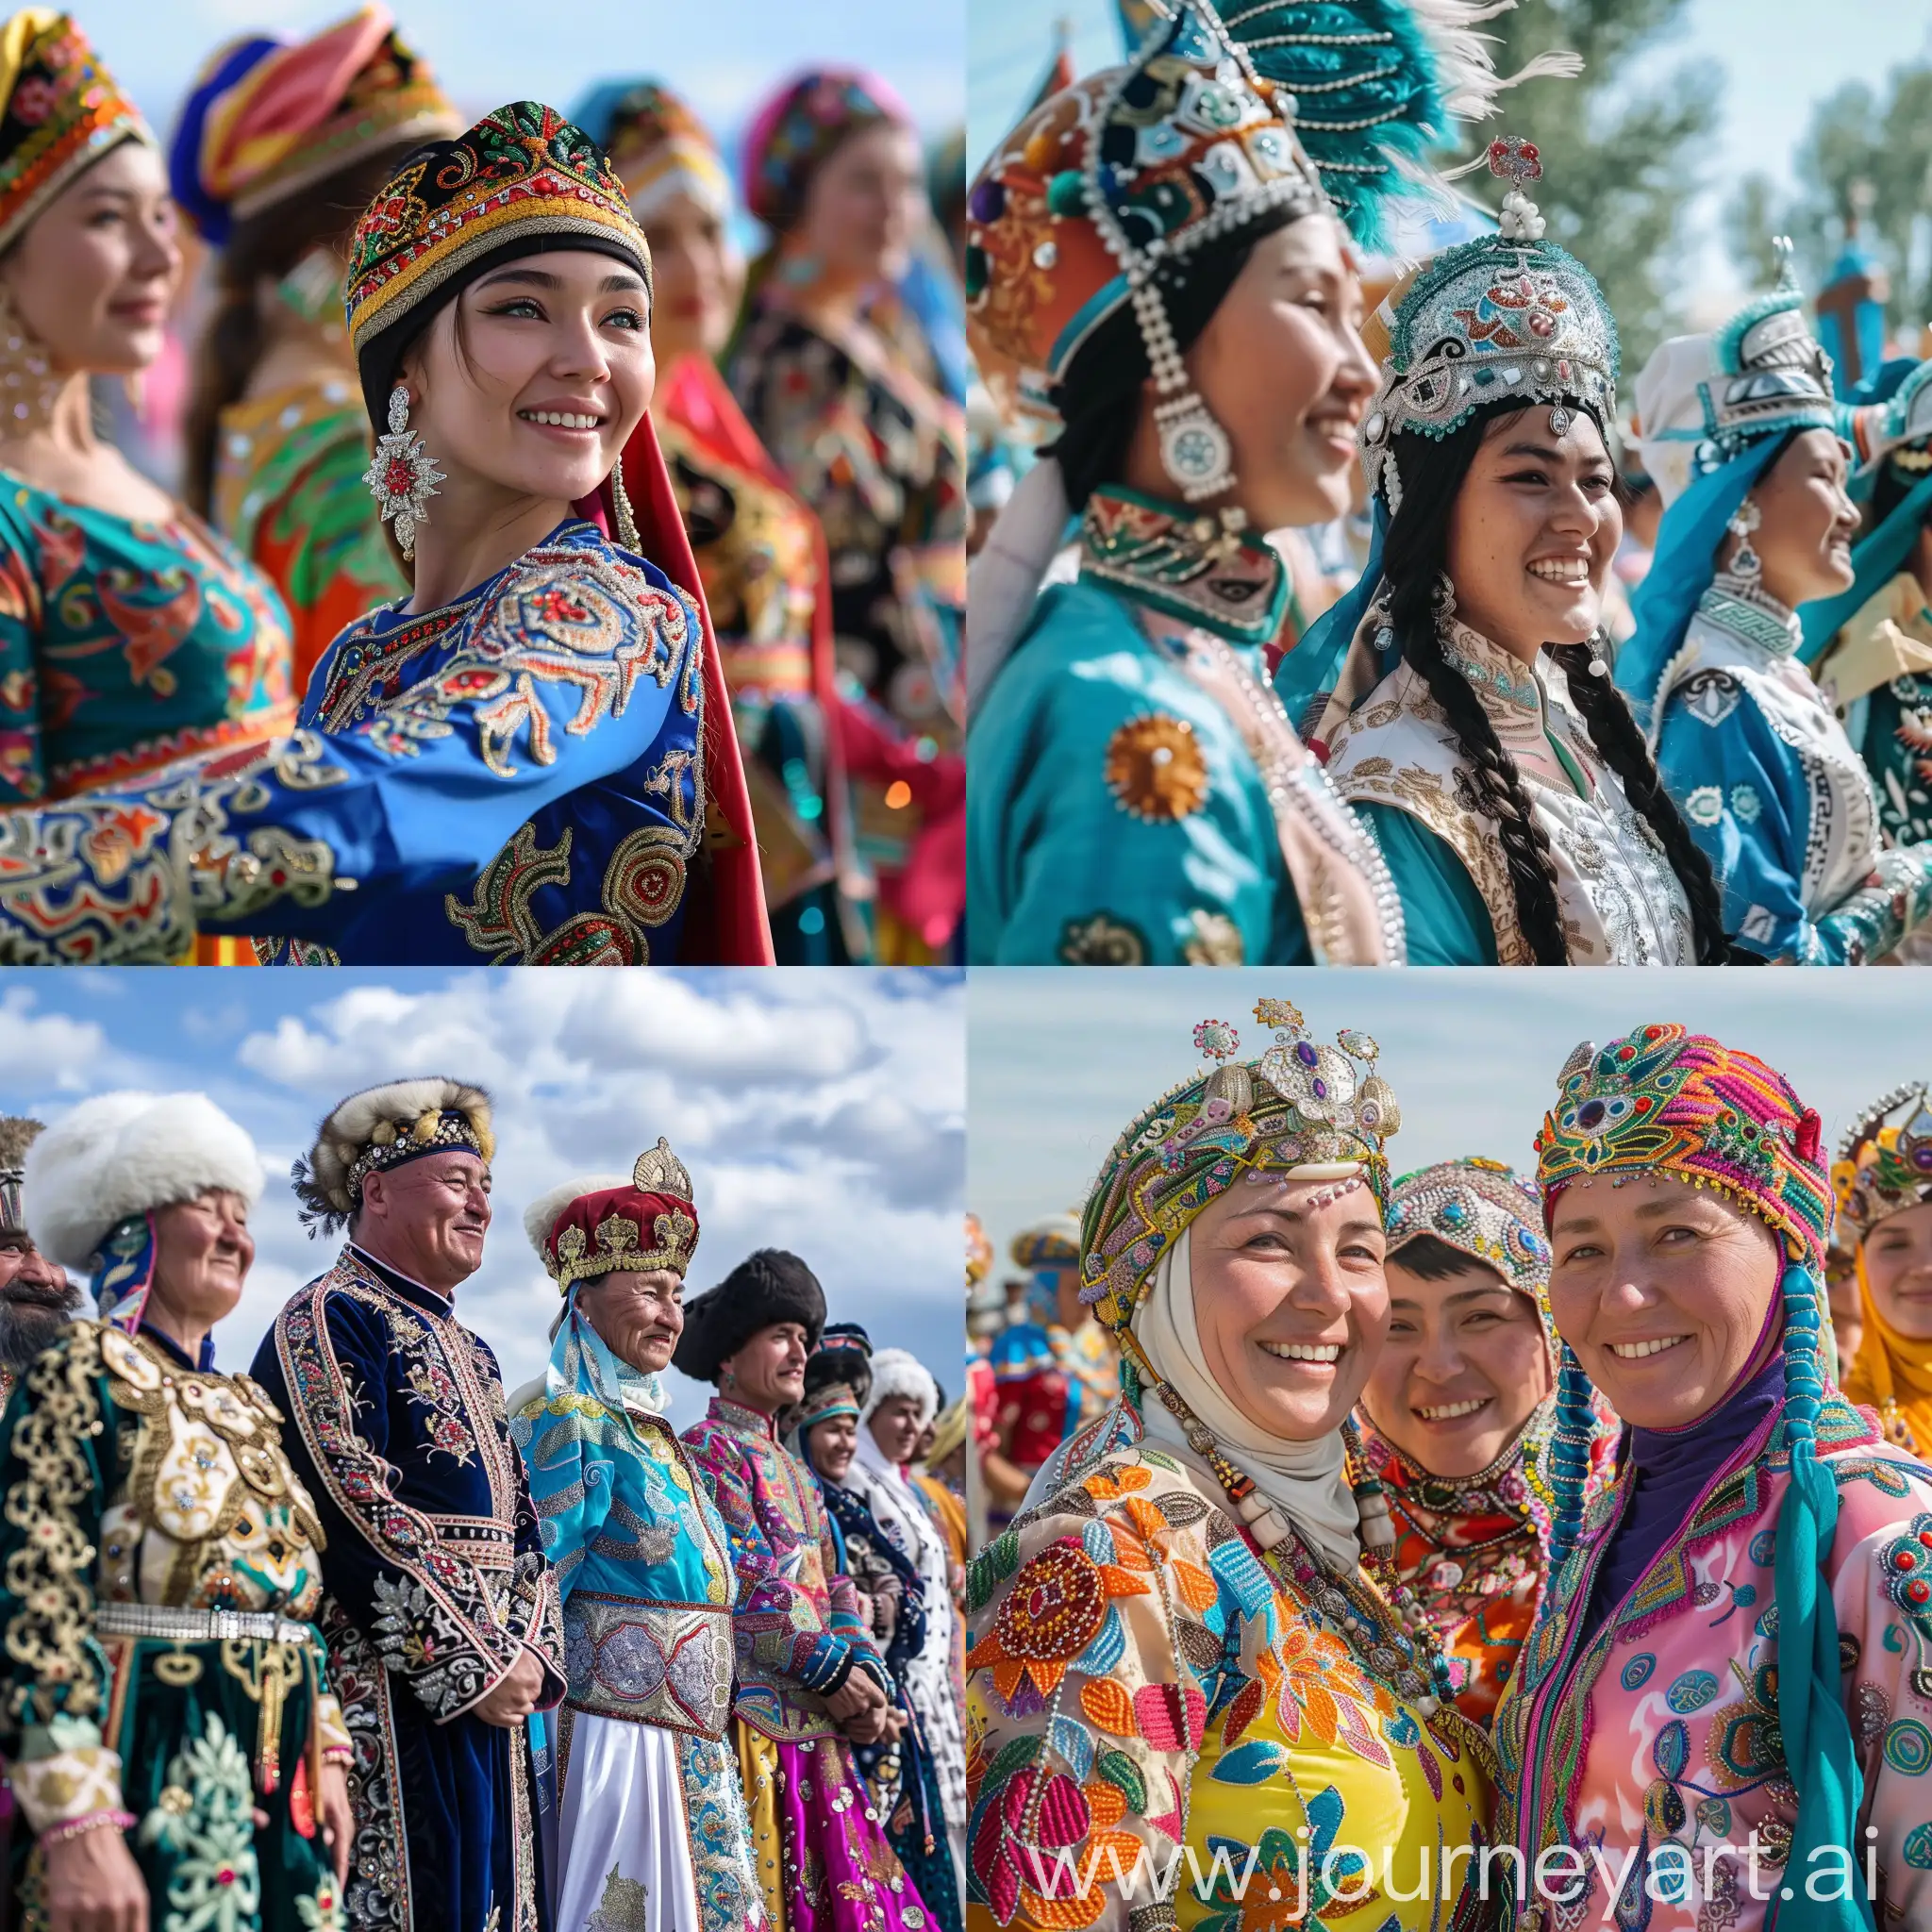 Kazakhs-Celebrate-Krsu-Holiday-with-Traditional-Festivities